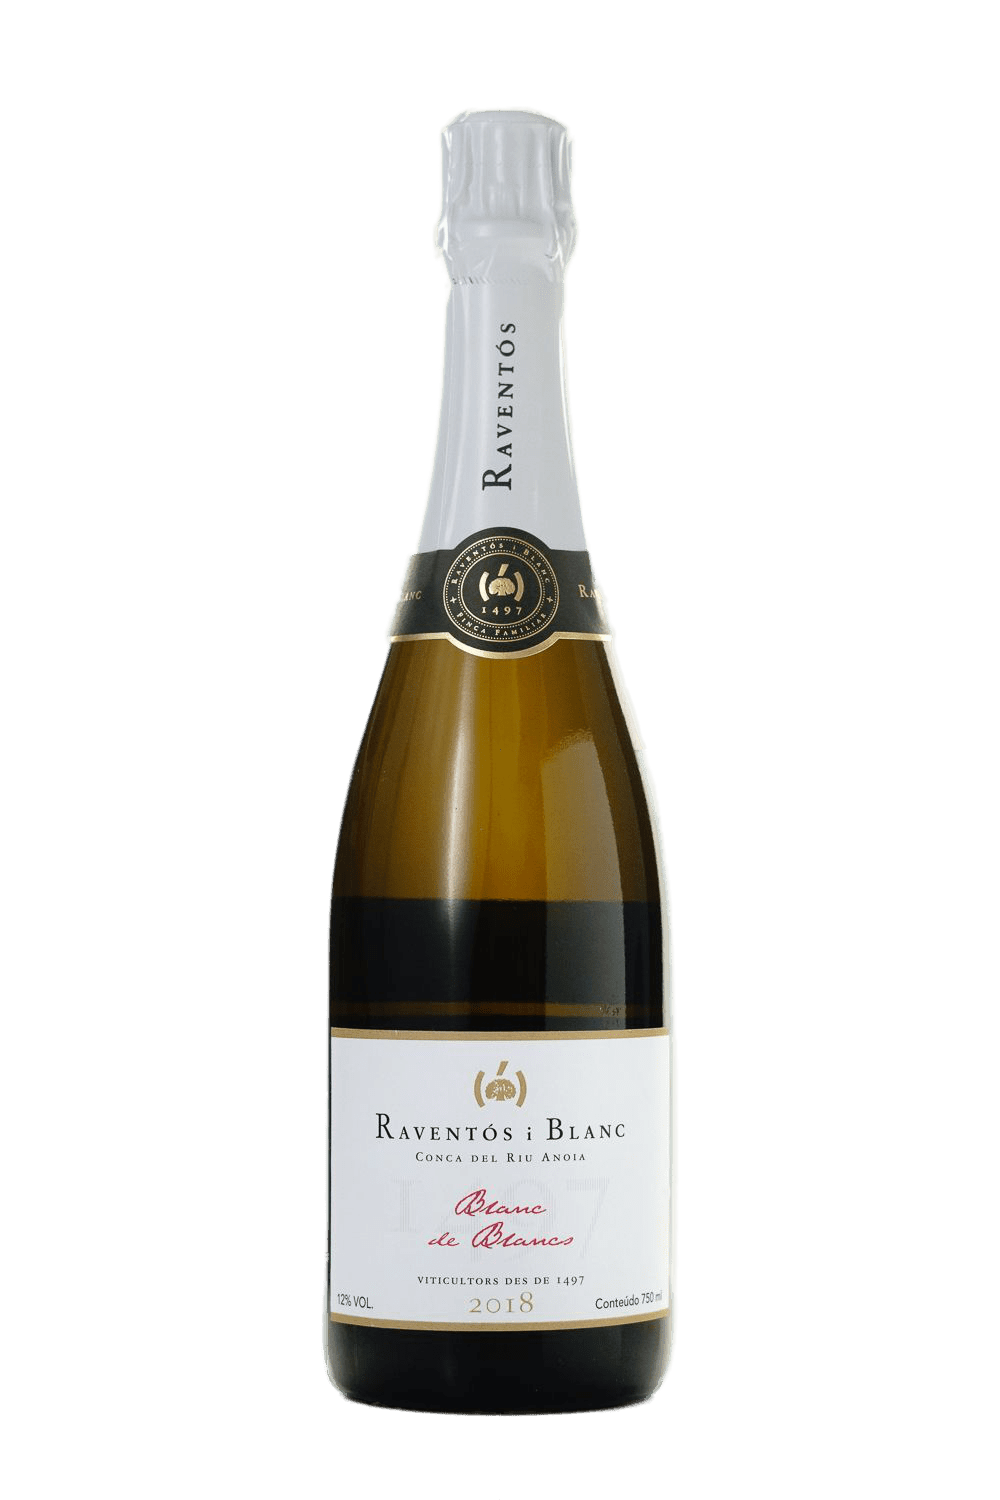 Raventós i Blanc - Espumante Blanc de Blancs 2018 - The Blend Wines